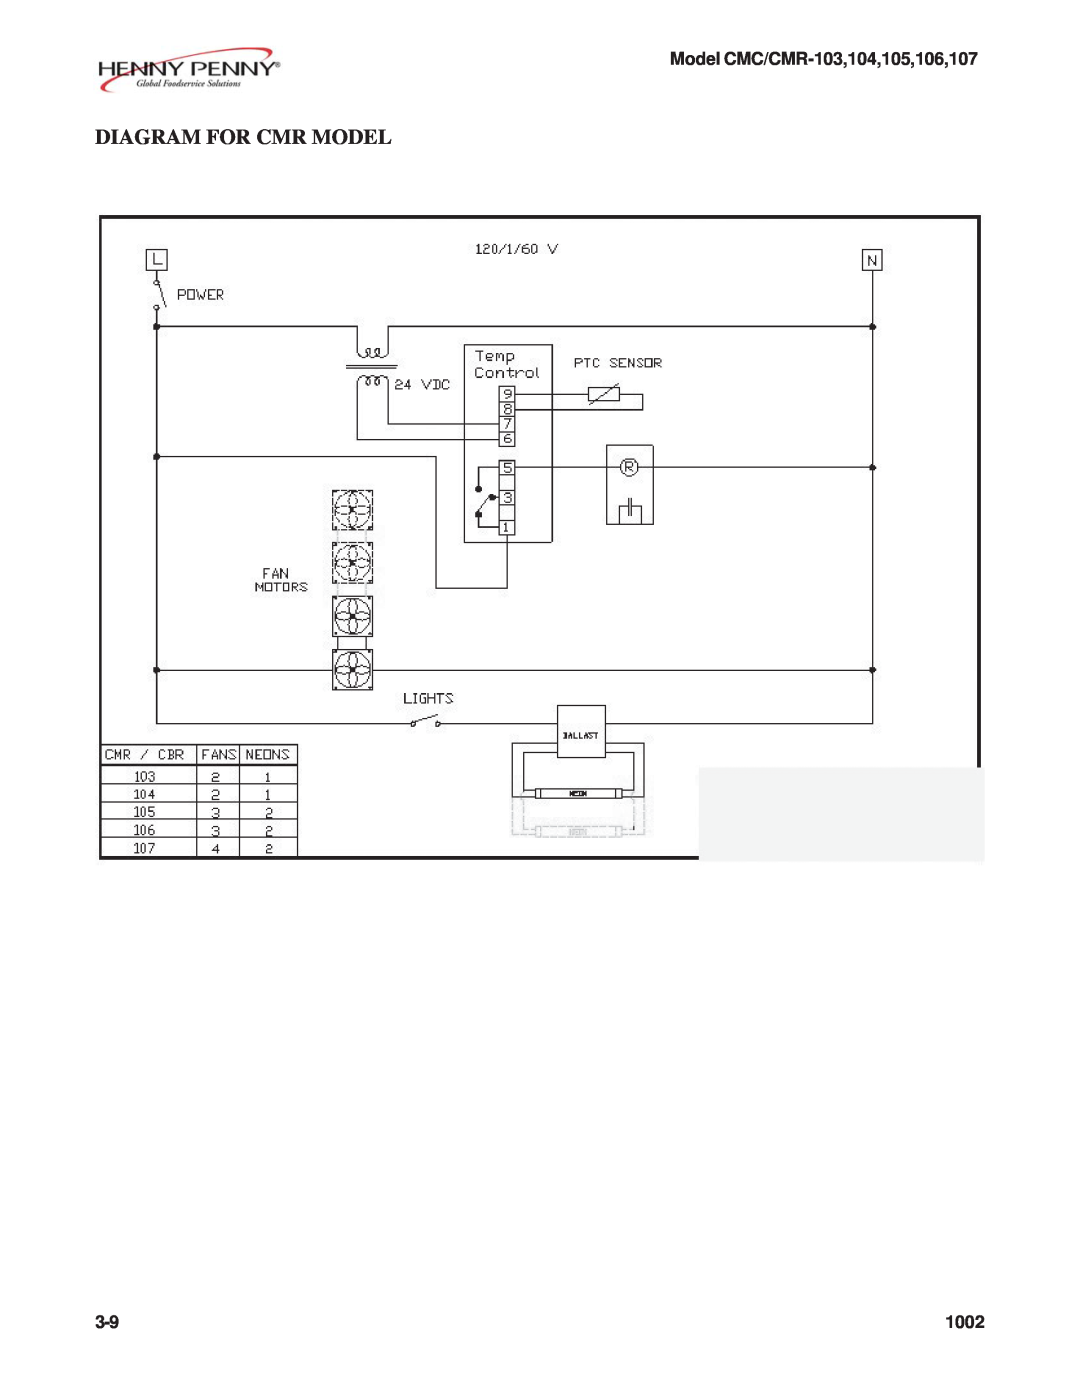 Henny Penny CMC/CMR-105, CMC/CMR-106, CMC/CMR-104 manual Diagram For Cmr Model, Model CMC/CMR-103,104,105,106,107, 1002 